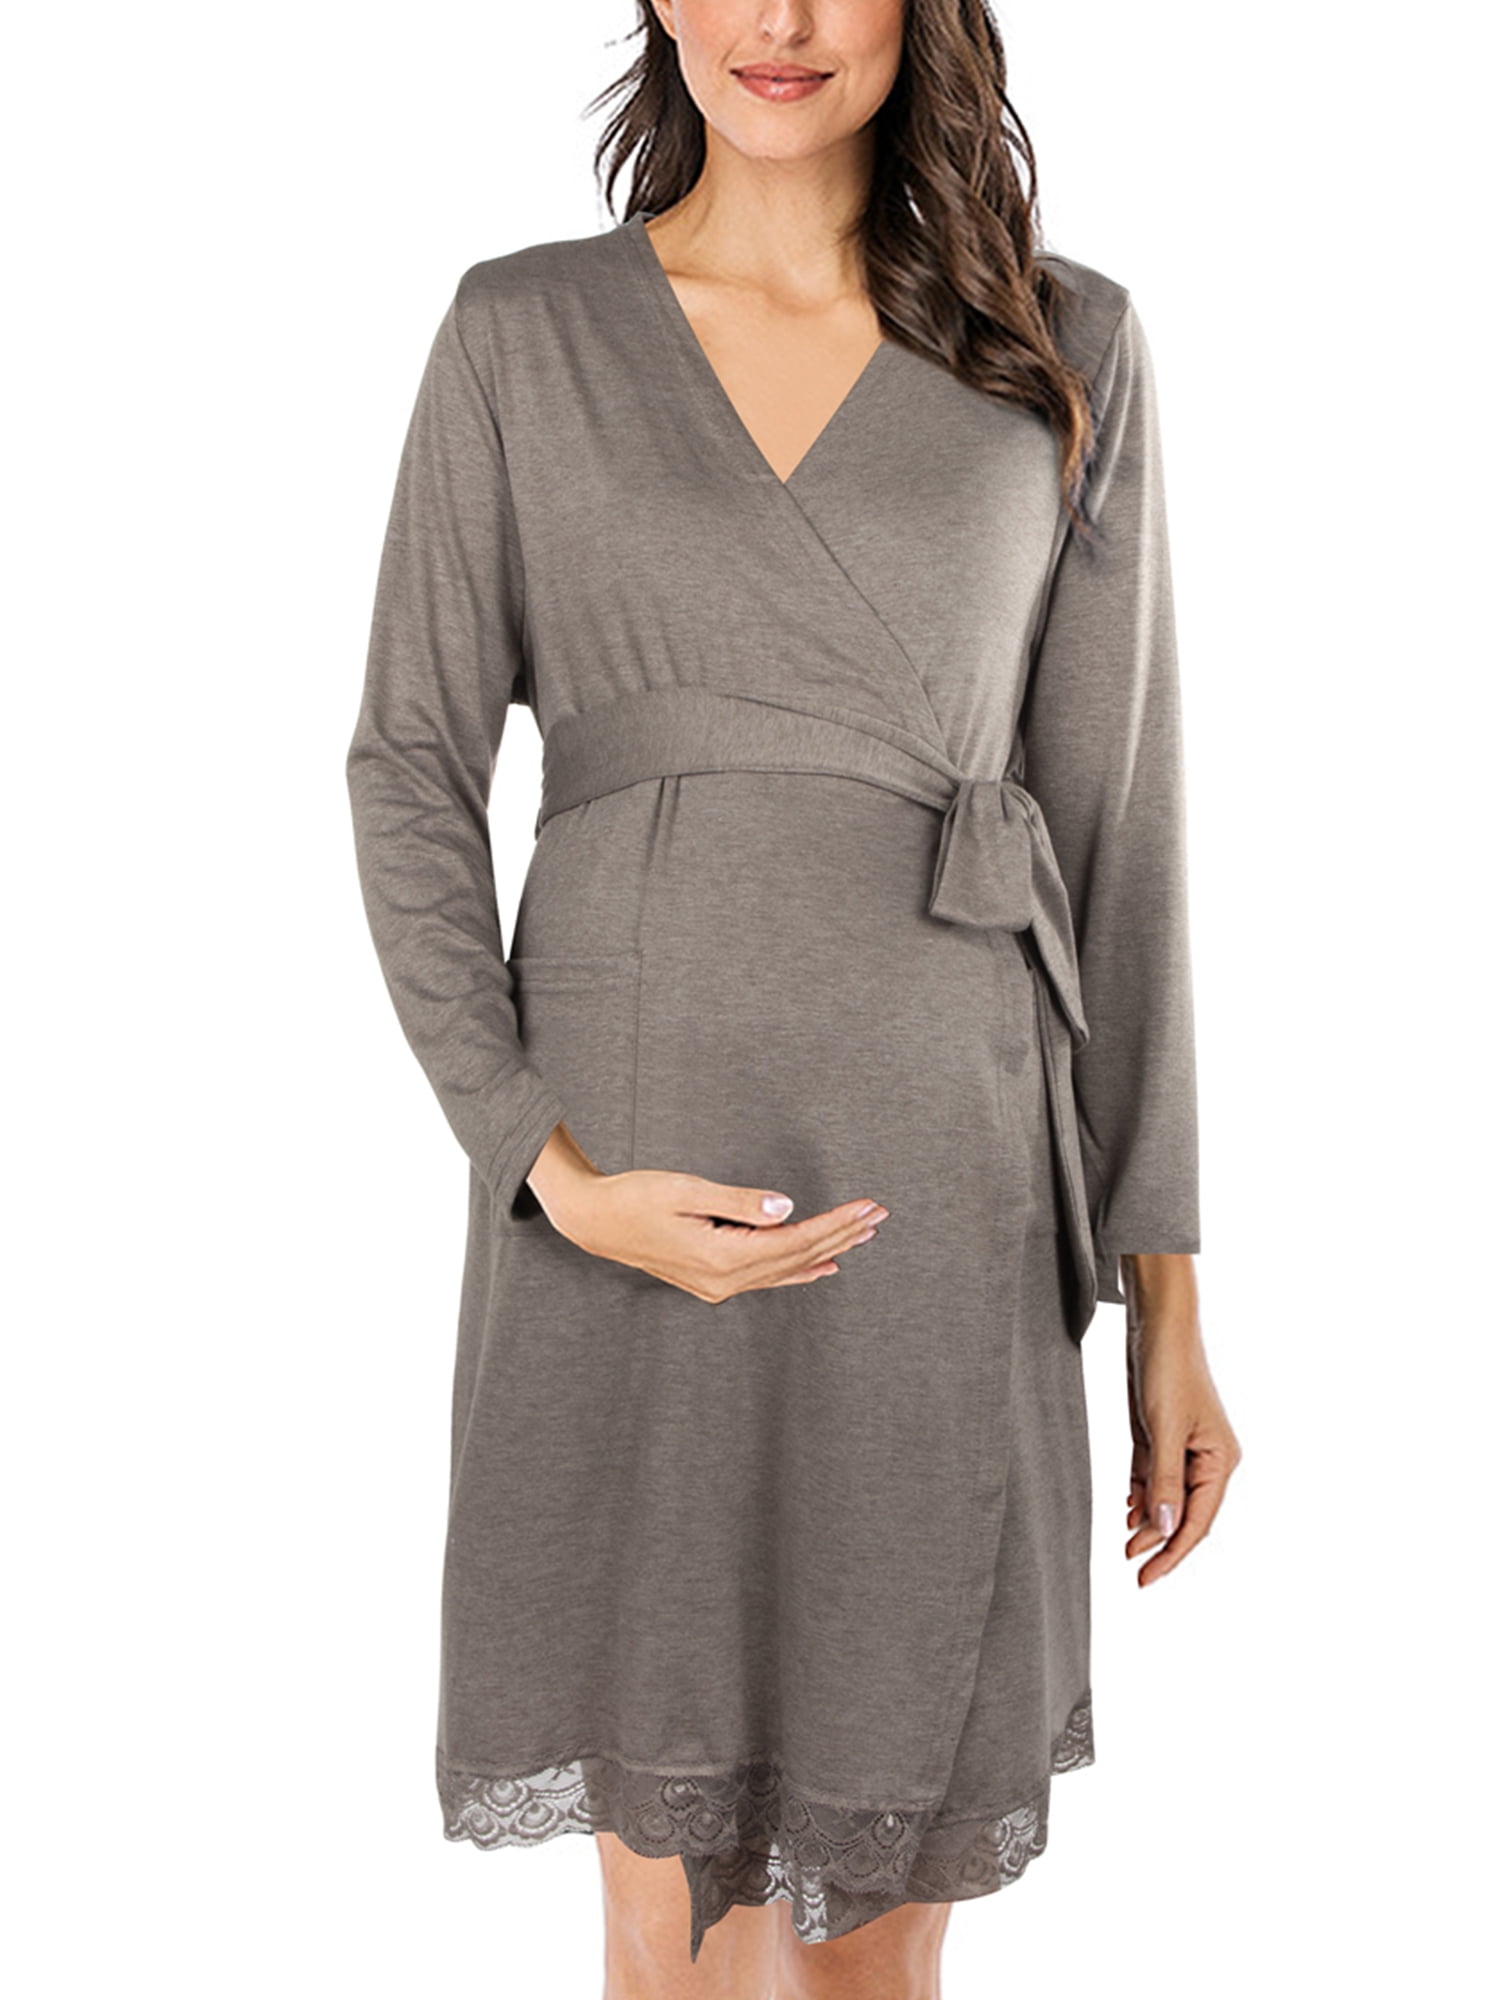 Hotouch Womens Maternity Dress Sleeveless Nursing Nightgown Breastfeeding Button Up Hospital Gown Sleepwear S-XXL 